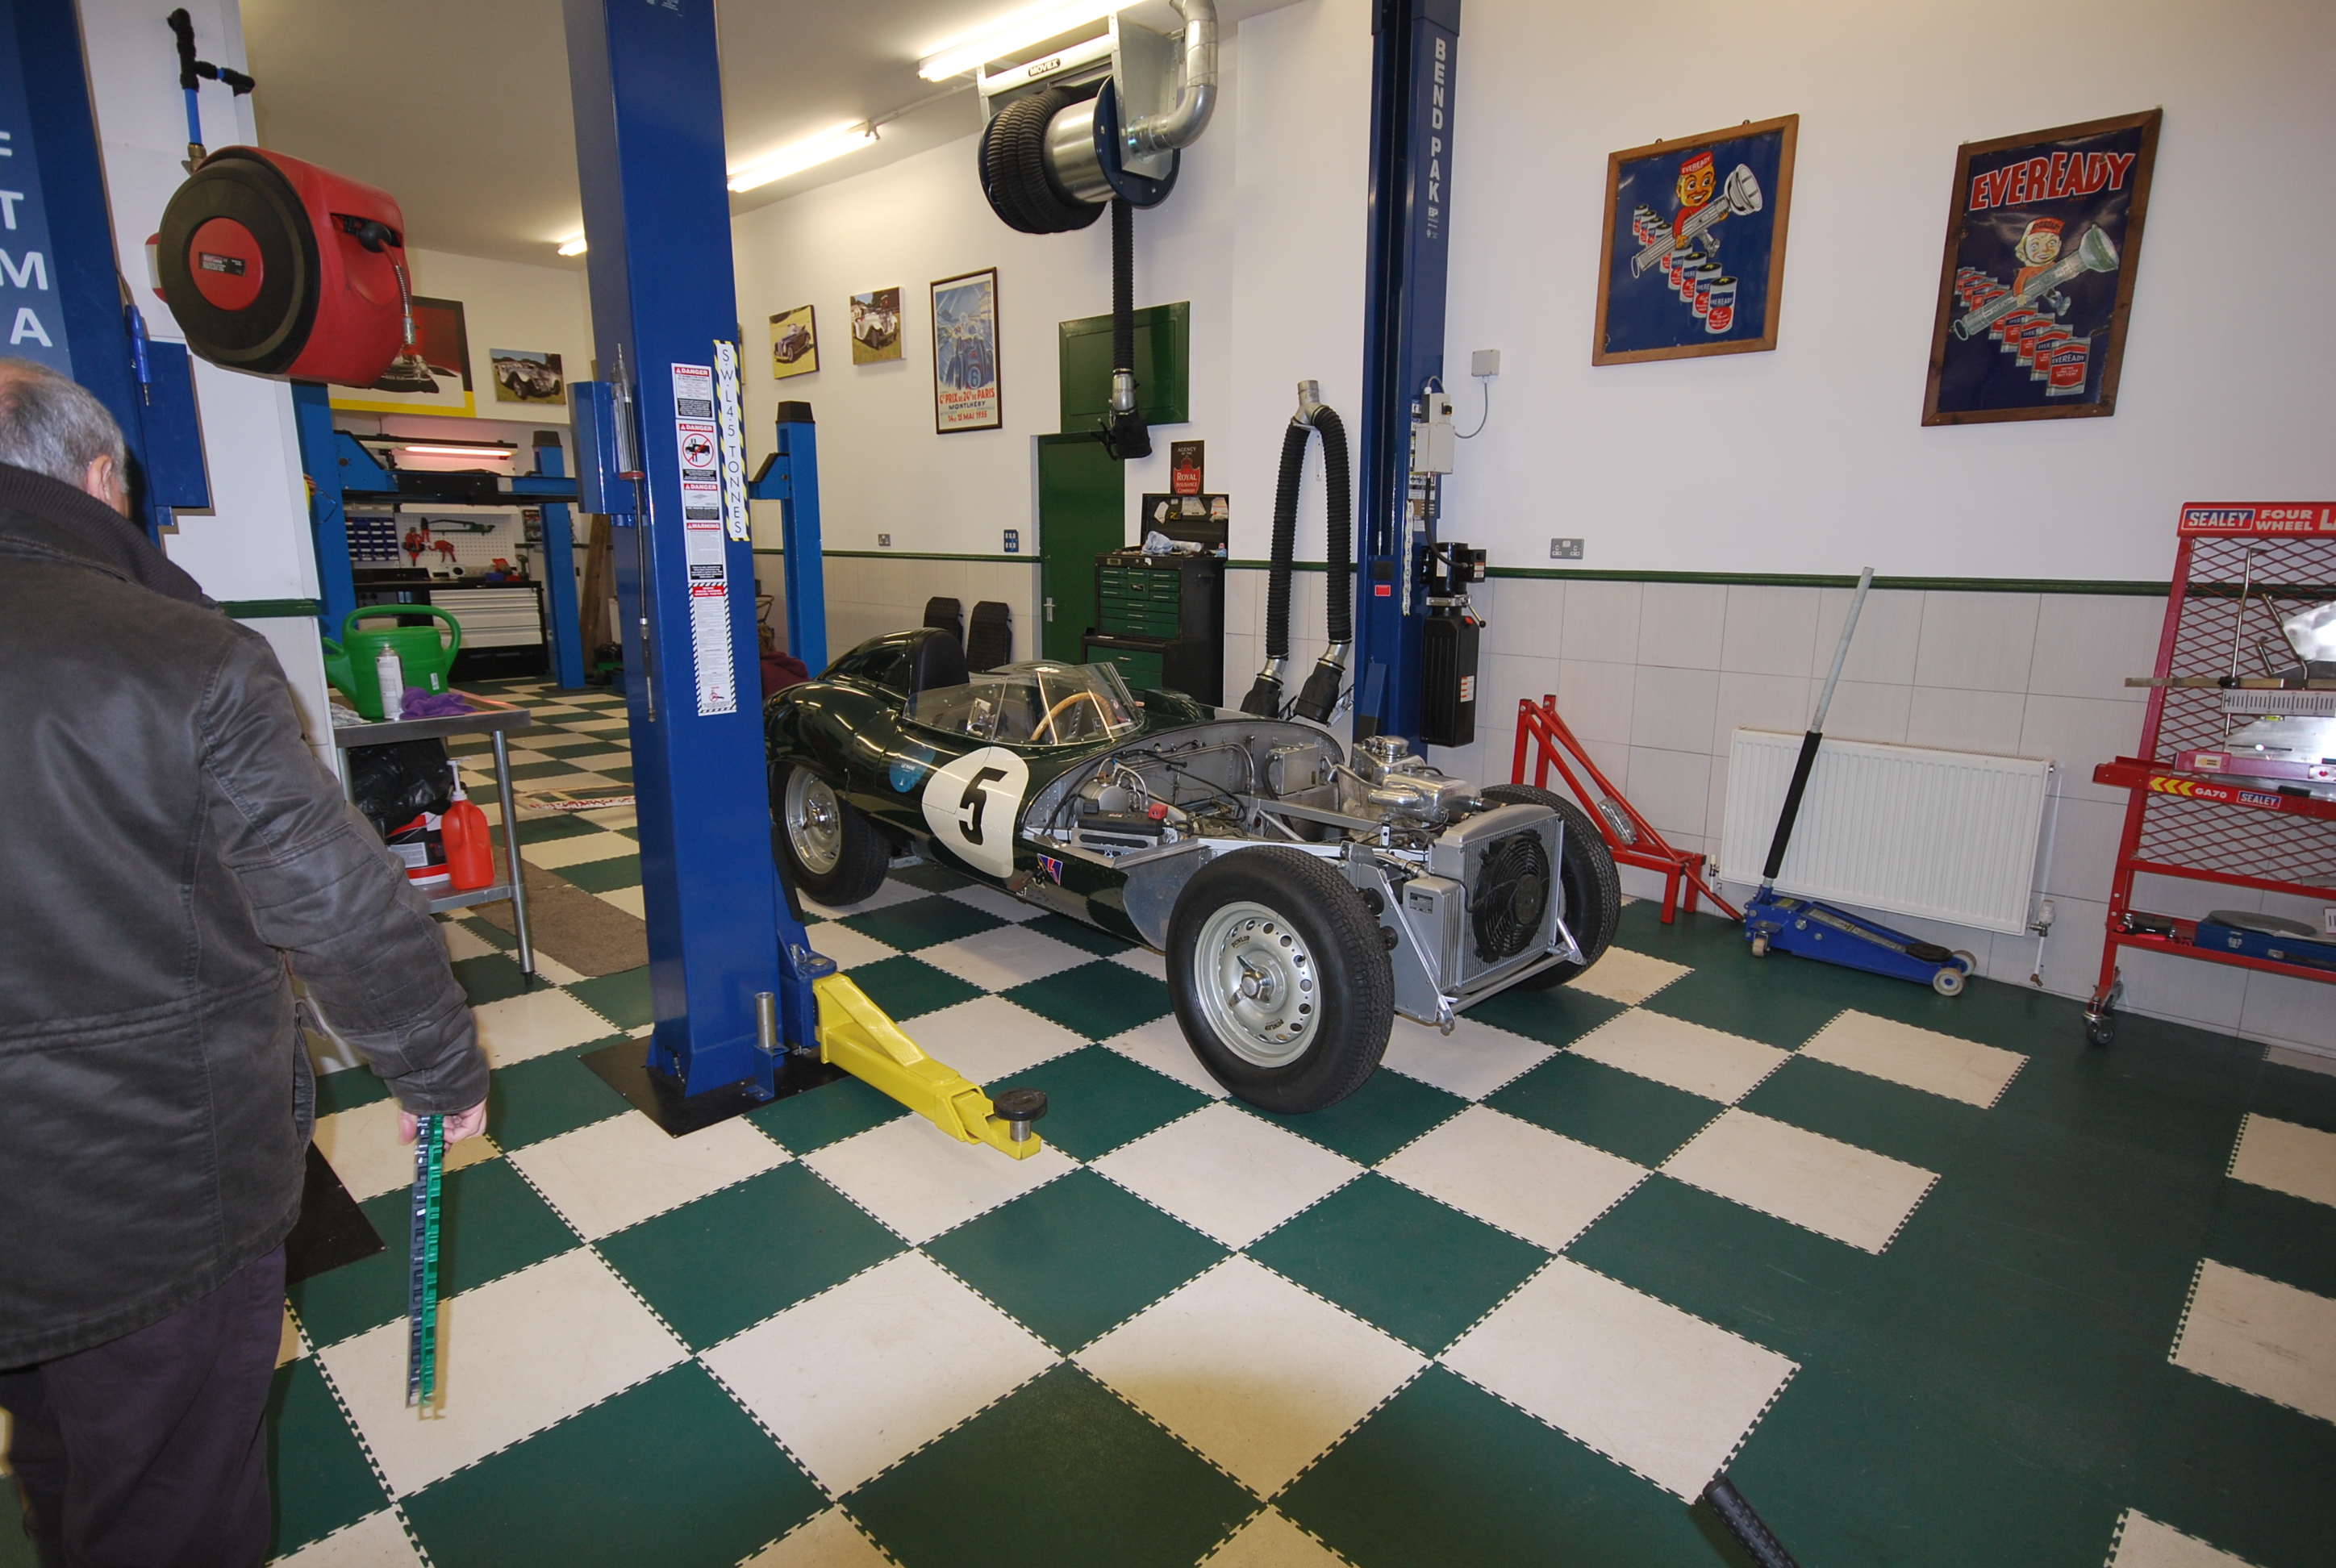 A Comprehensive Tutorial: How to Install Garage Floor Tiles